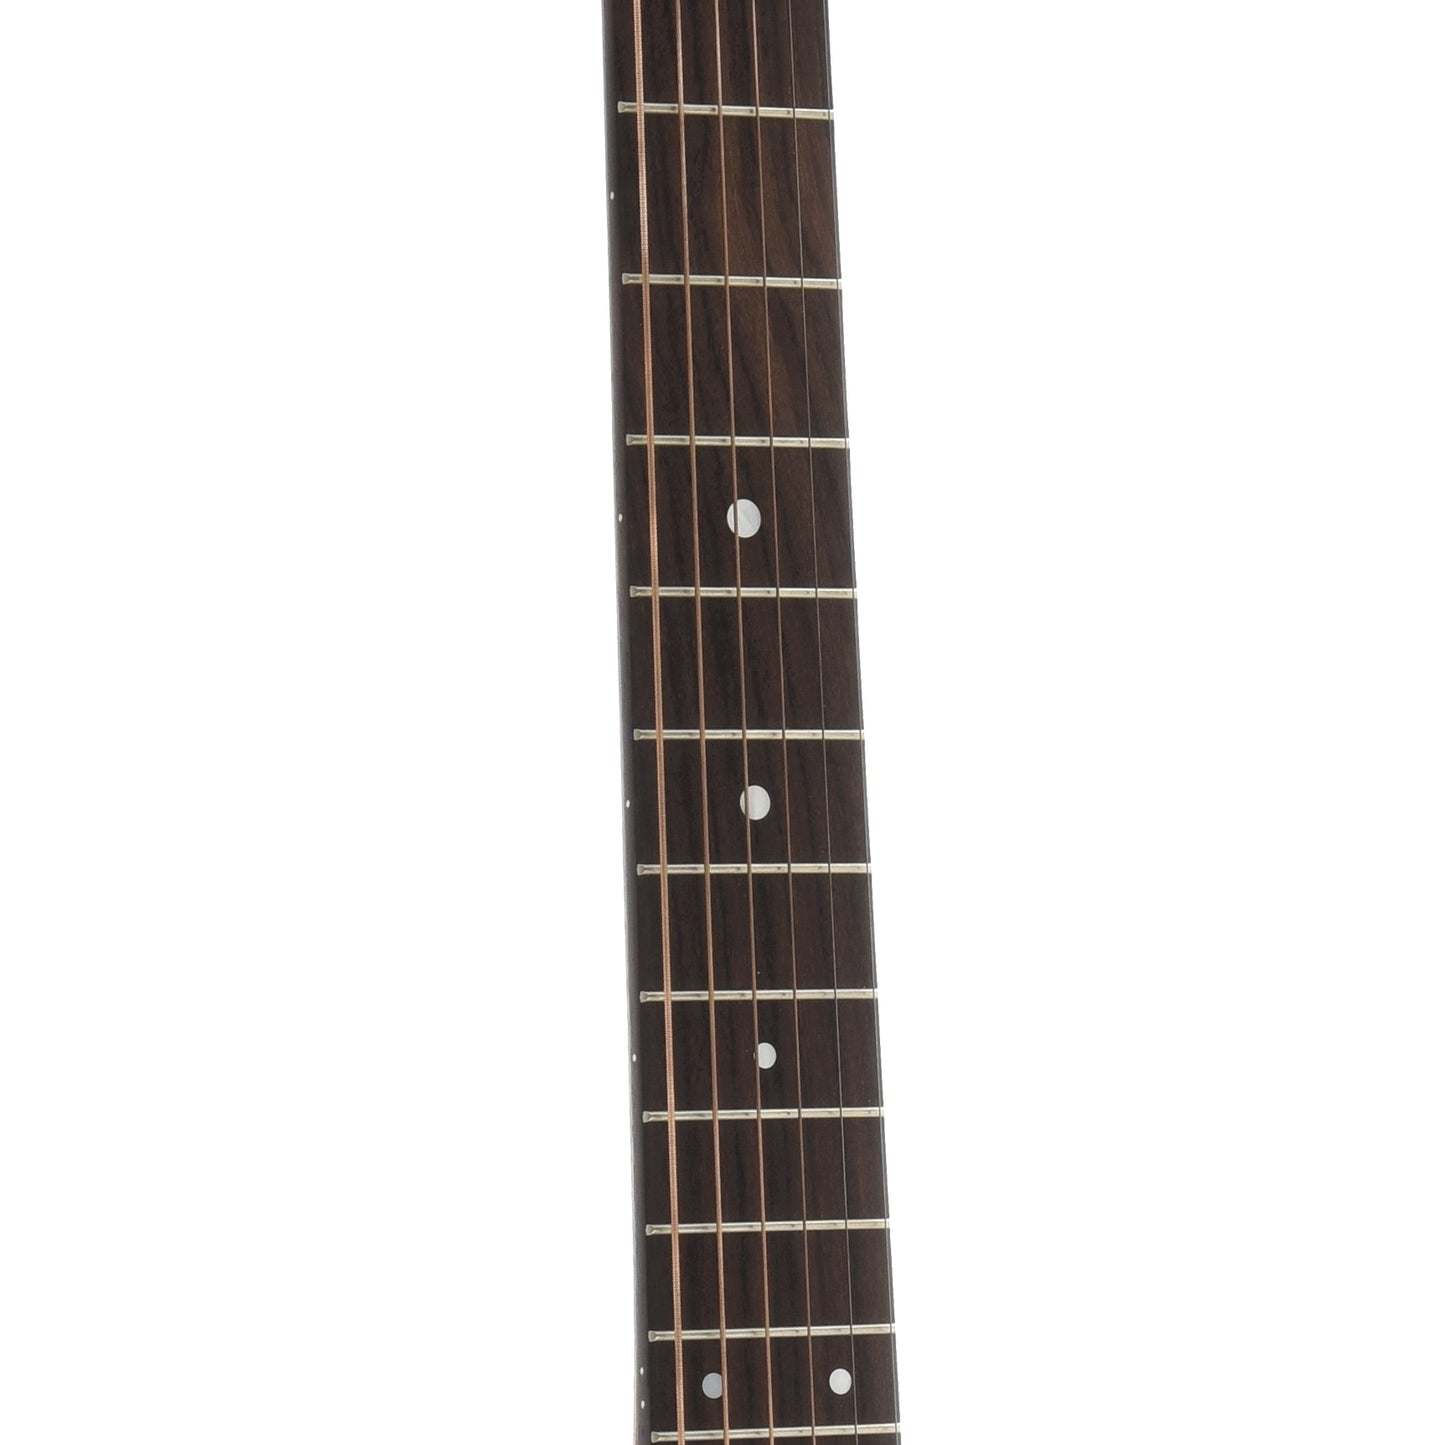 Fretboard of Martin 000-17 Whiskey Sunset Guitar